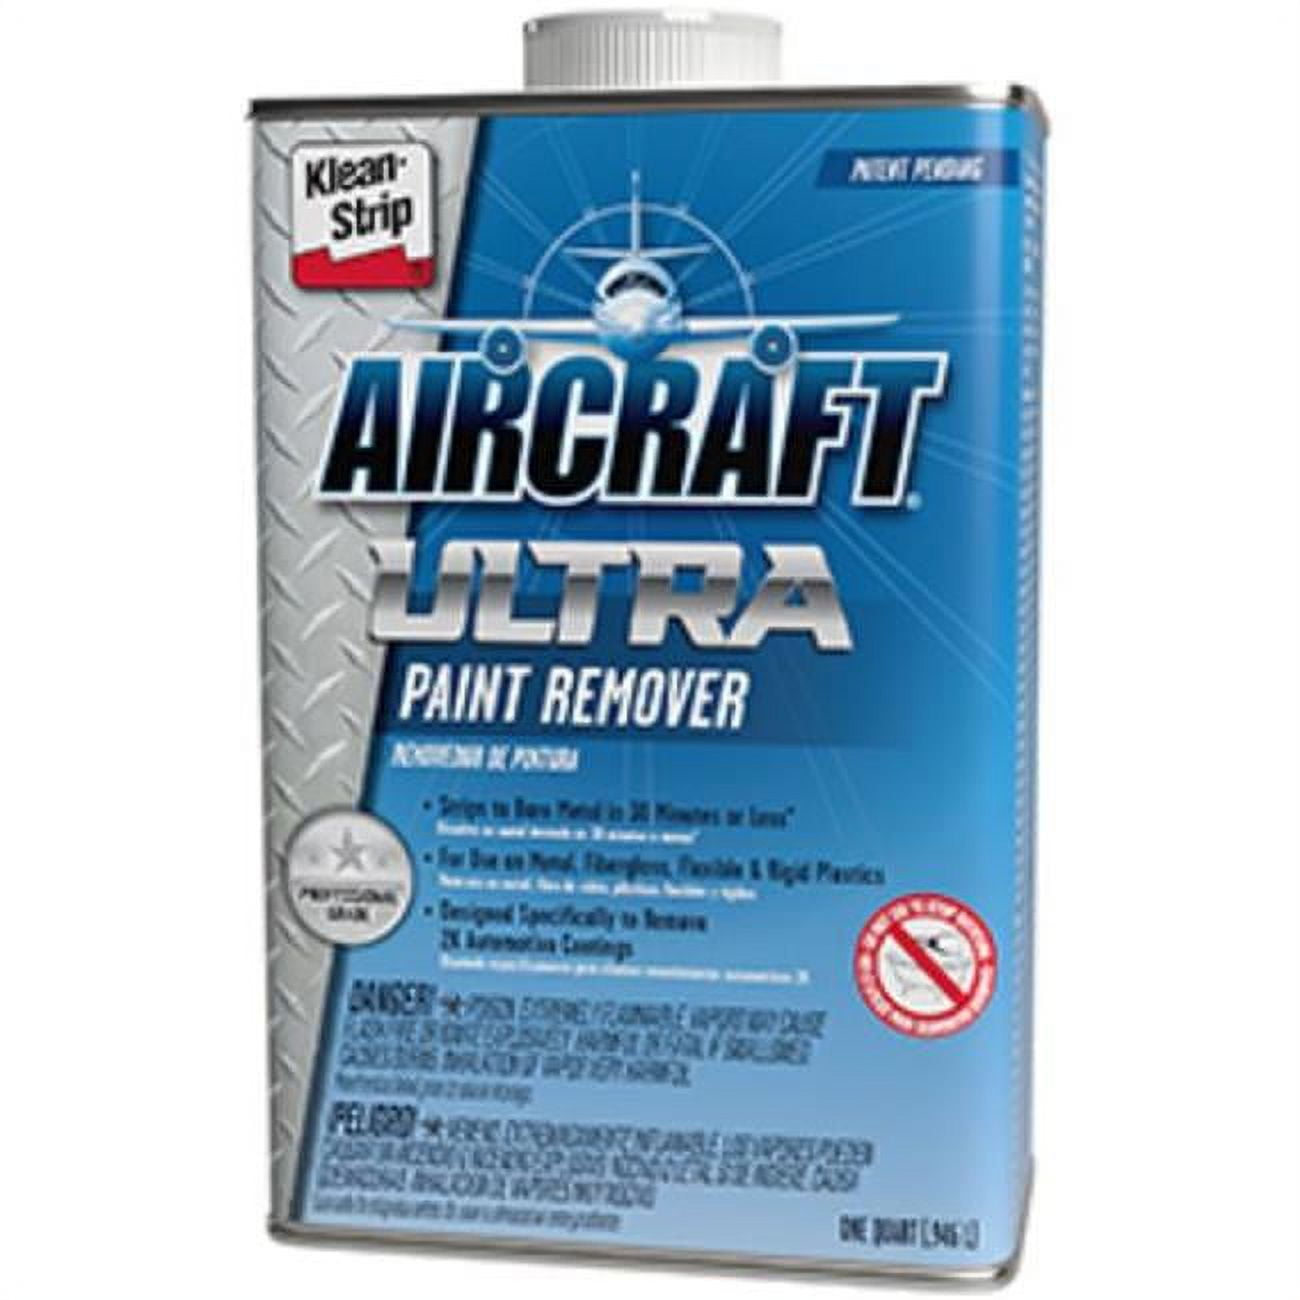 Klean Strip QAR2000 qt Aircraft Non-Methylene Chloride Paint Remover